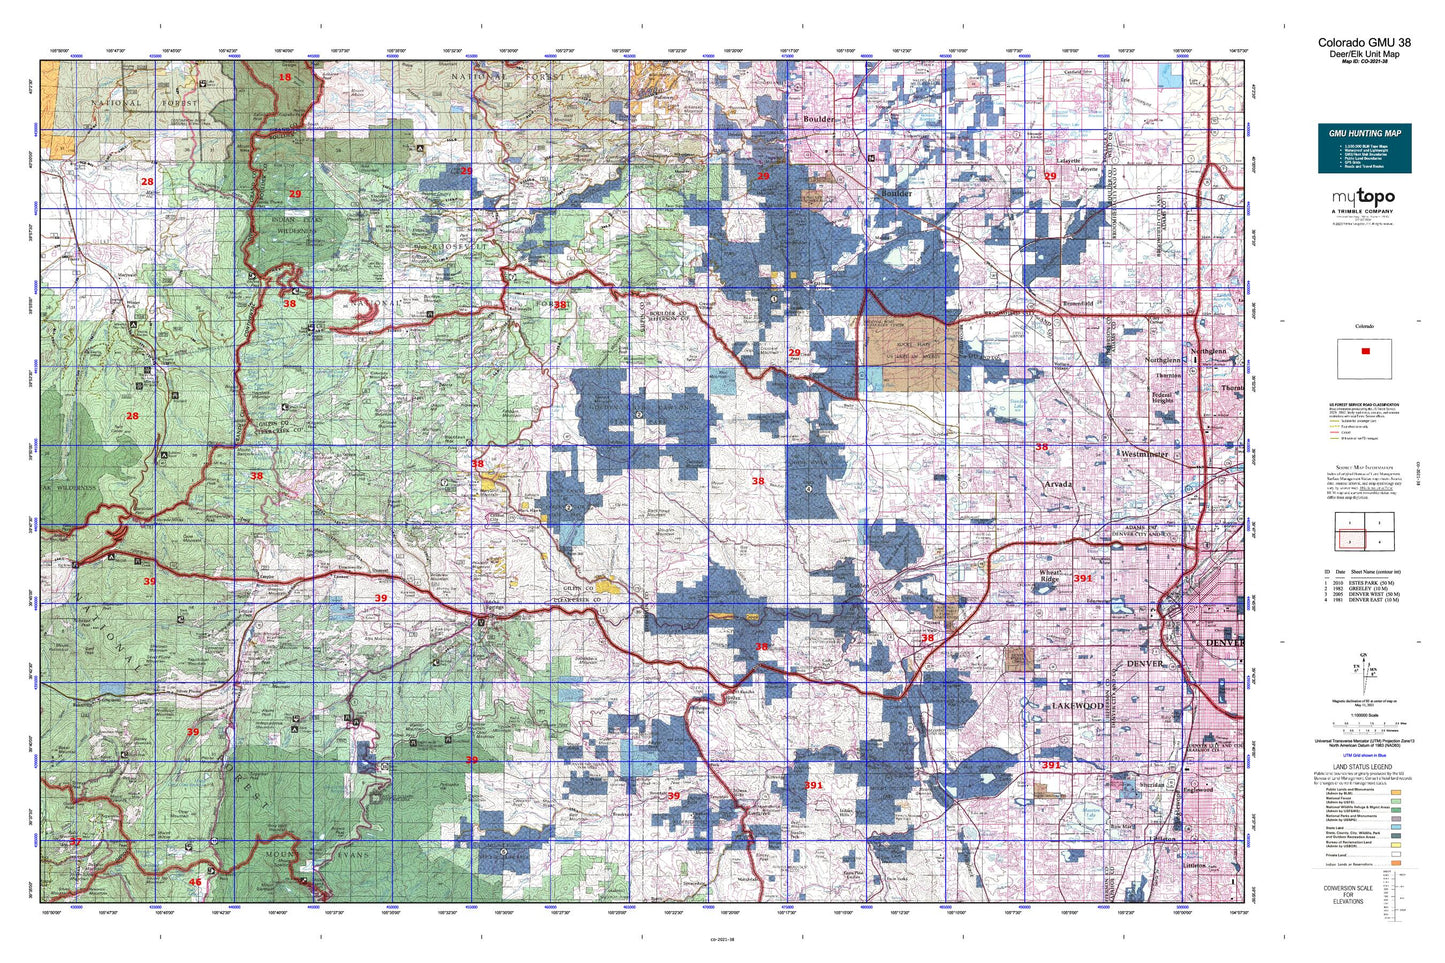 Colorado GMU 38 Map Image